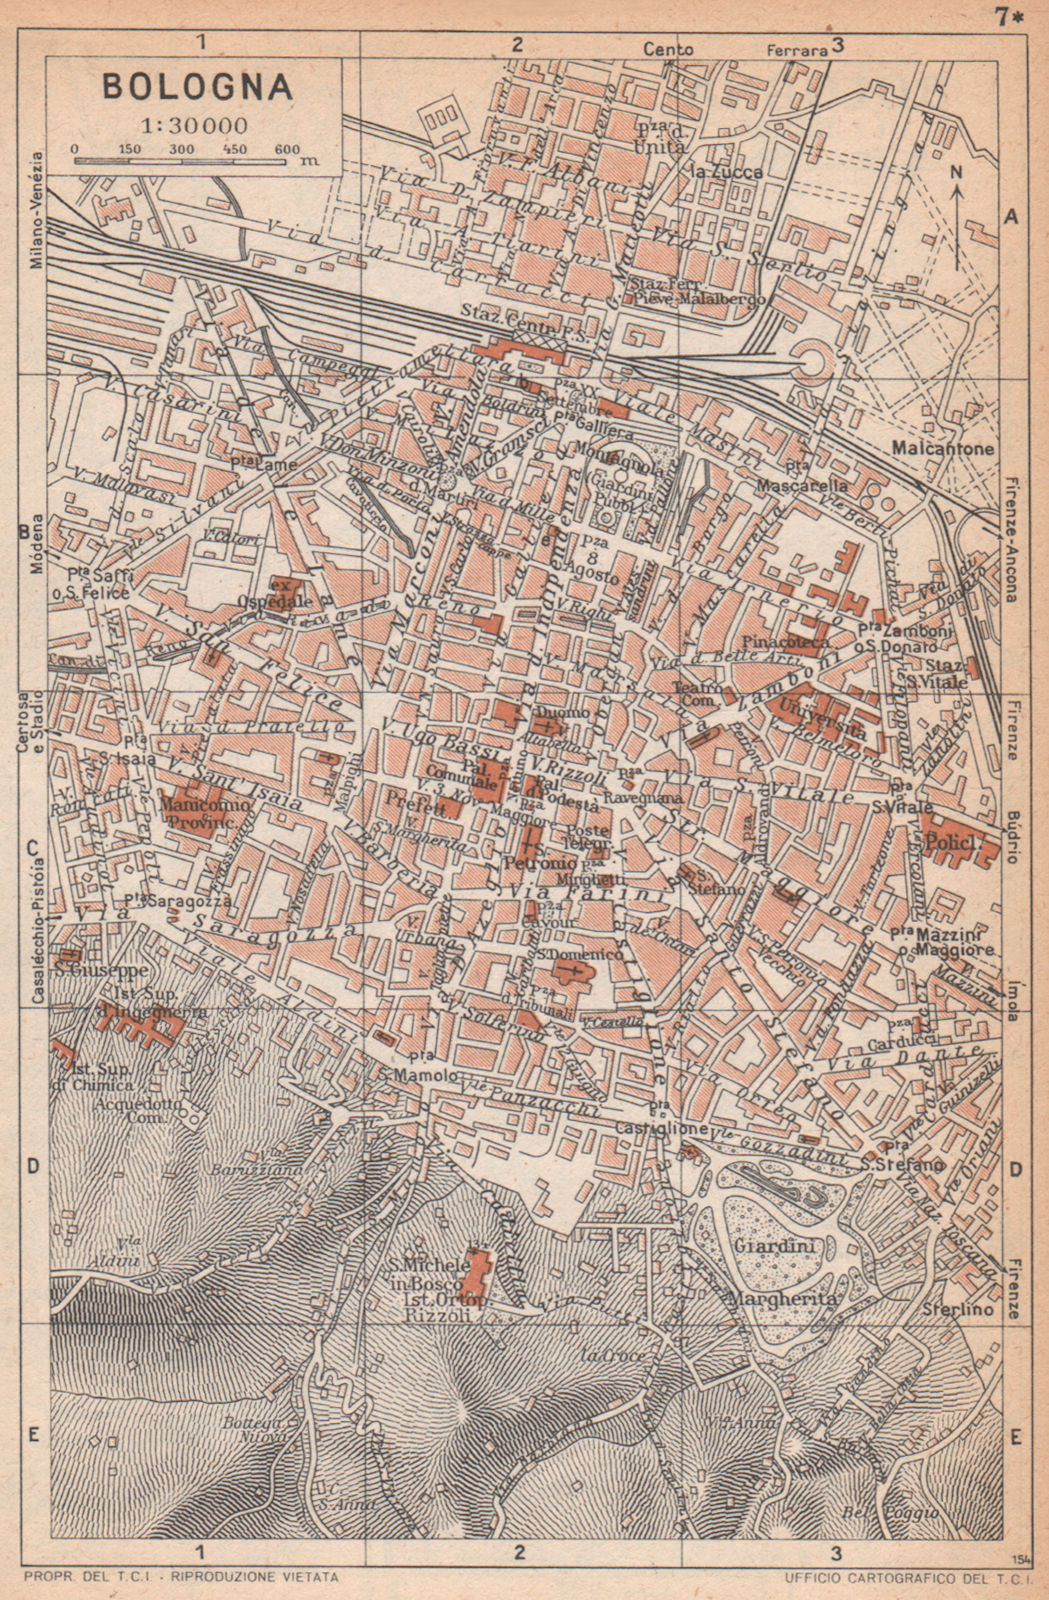 BOLOGNA vintage town city map plan pianta della città. Italy 1958 old